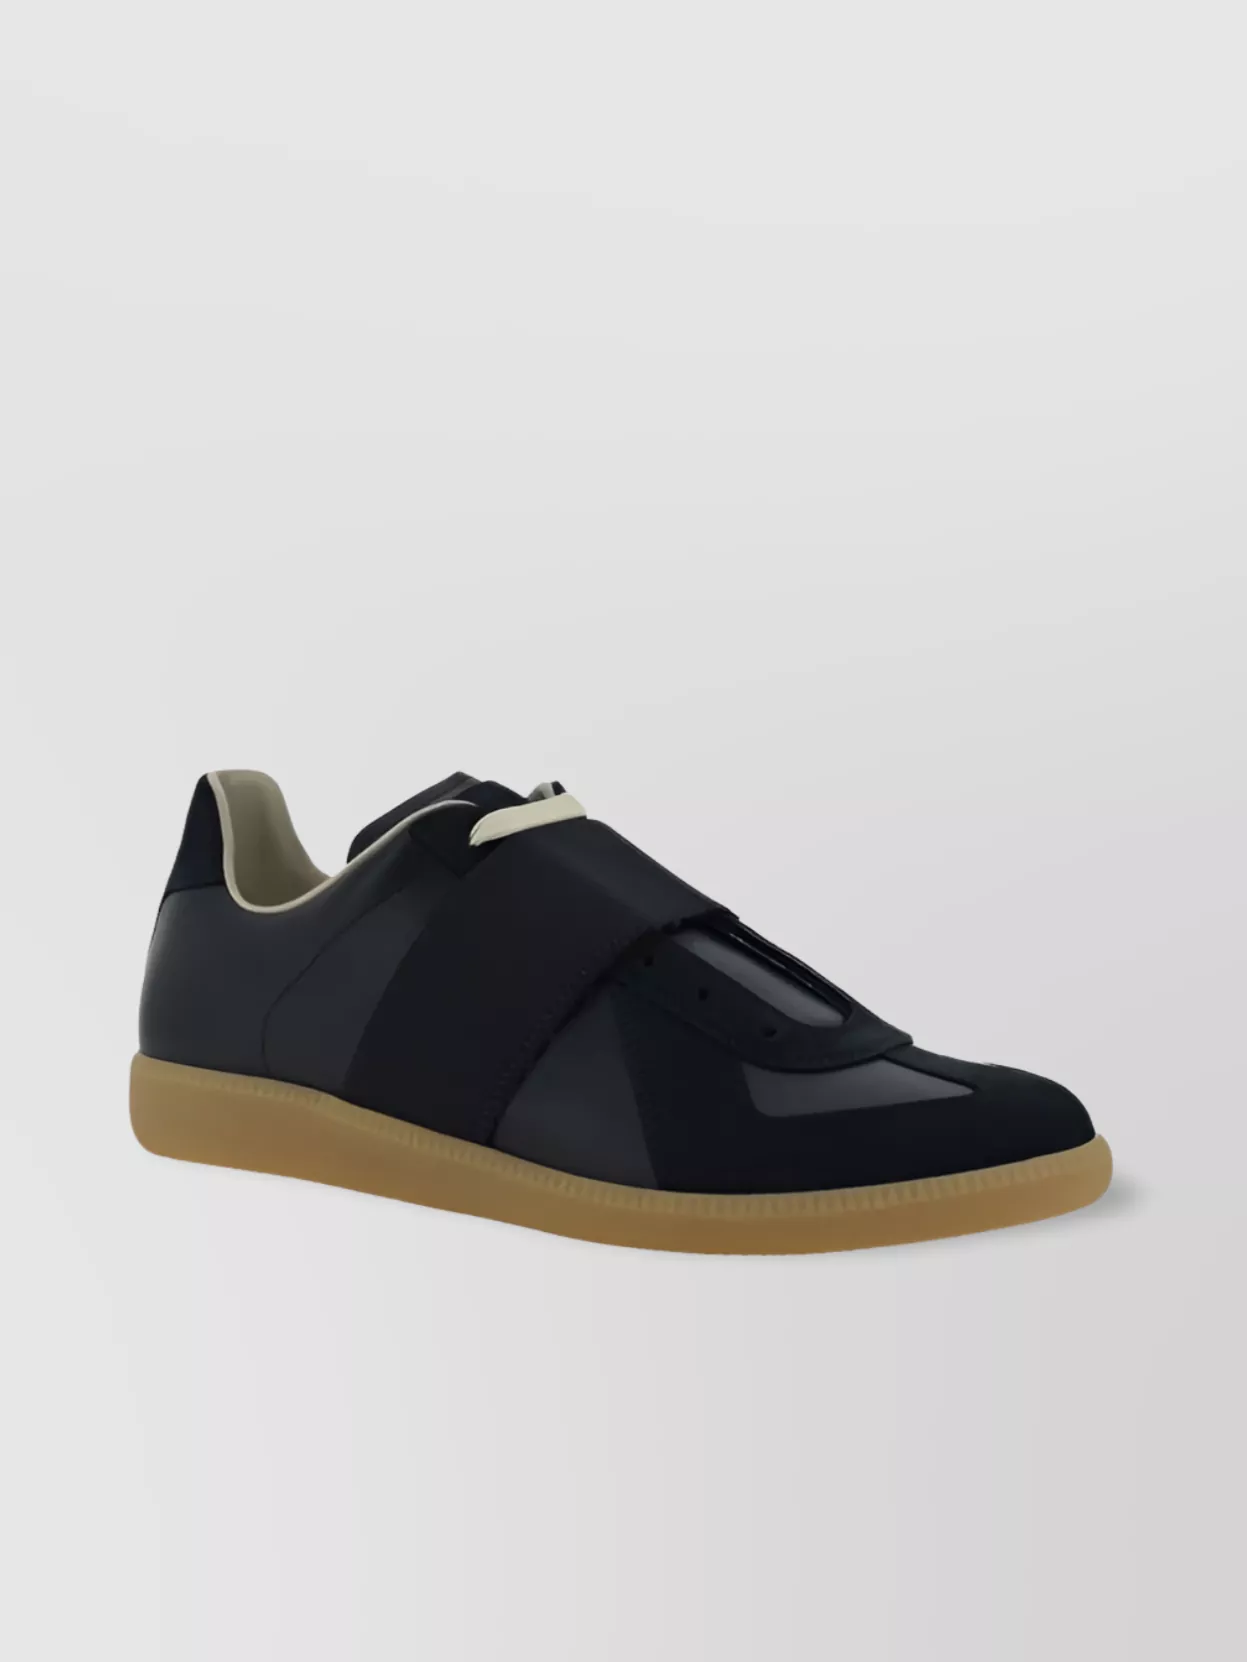 Maison Margiela Calfskin Low-top Sneakers Patent Finish In Black